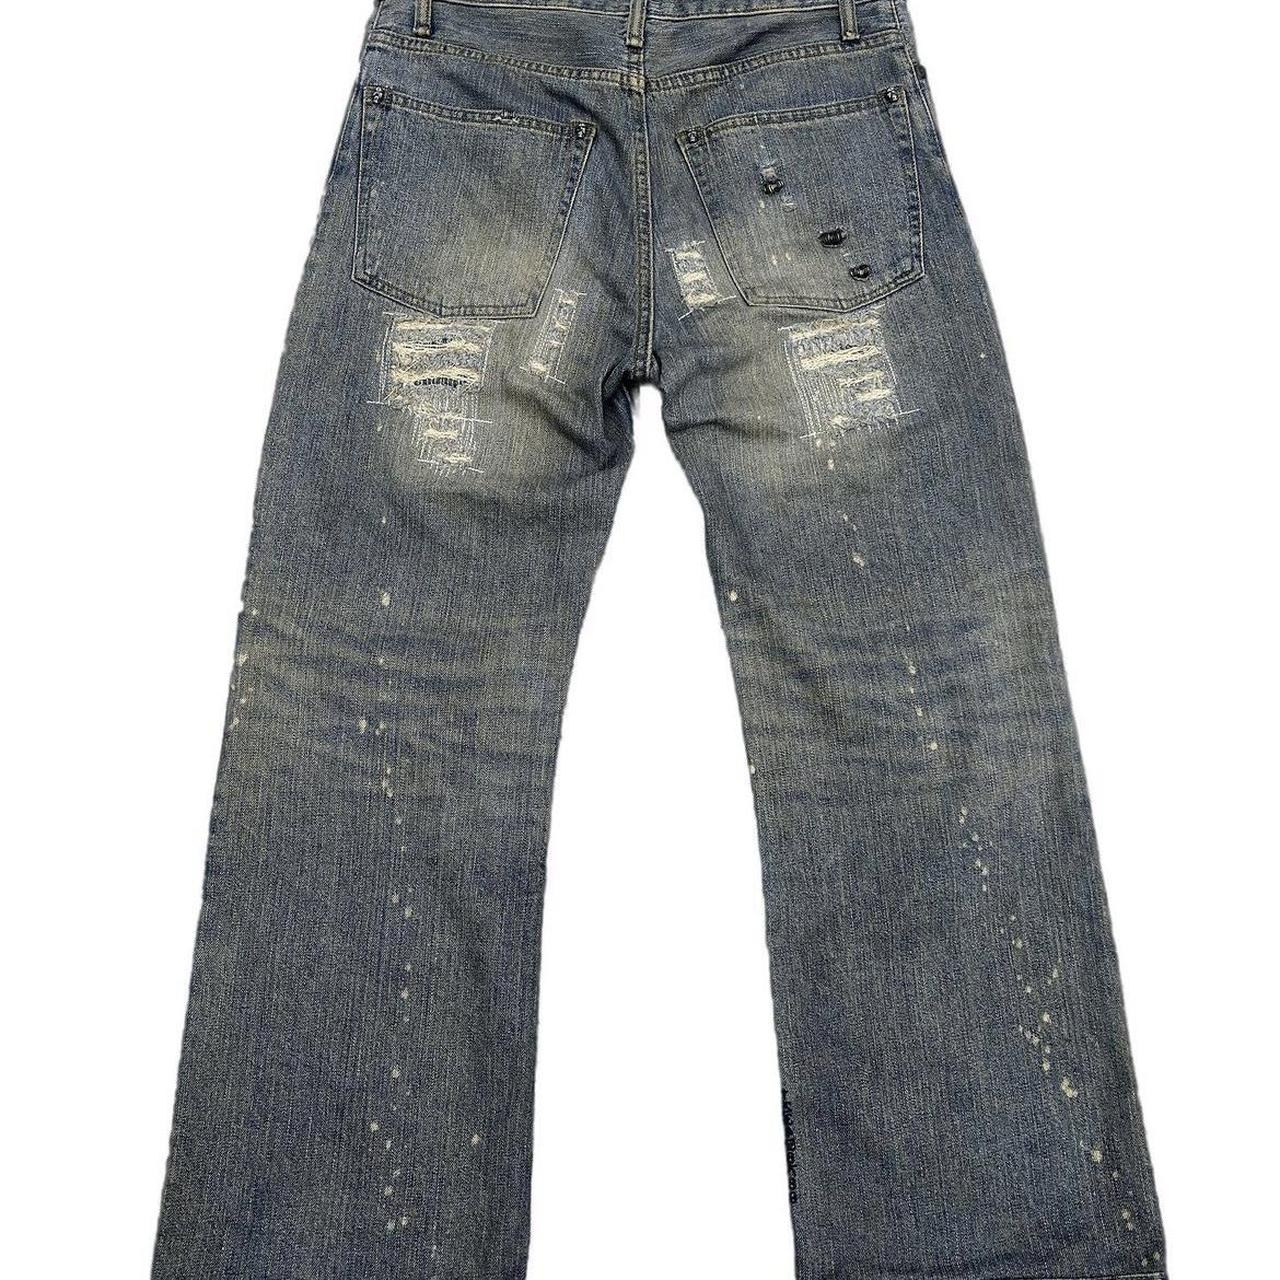 ifsixwasnine baggy mudmax jeans send offers &... - Depop